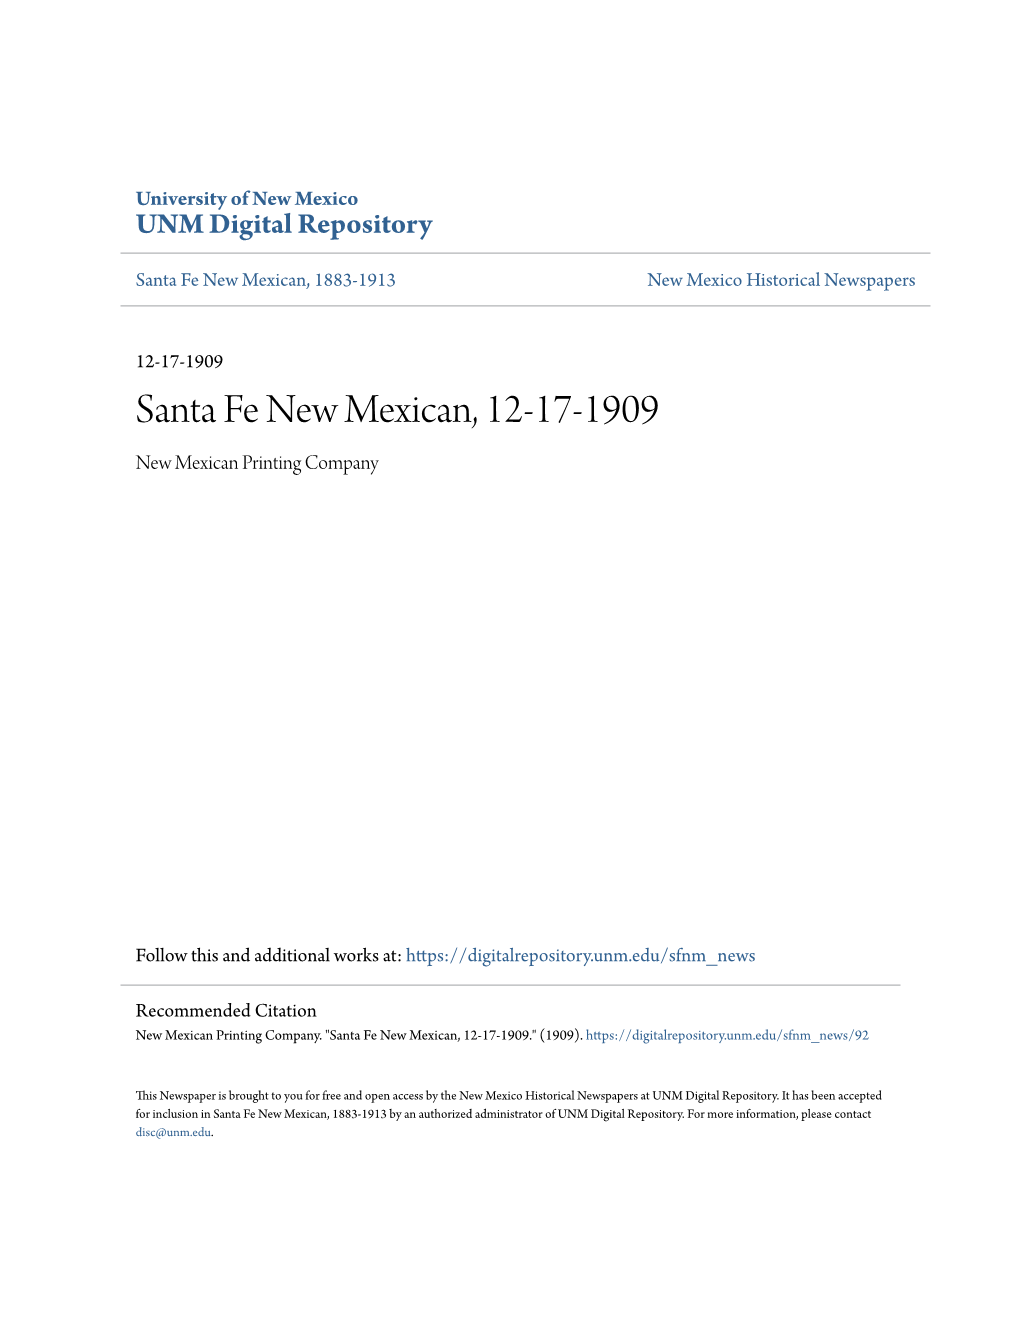 Santa Fe New Mexican, 12-17-1909 New Mexican Printing Company